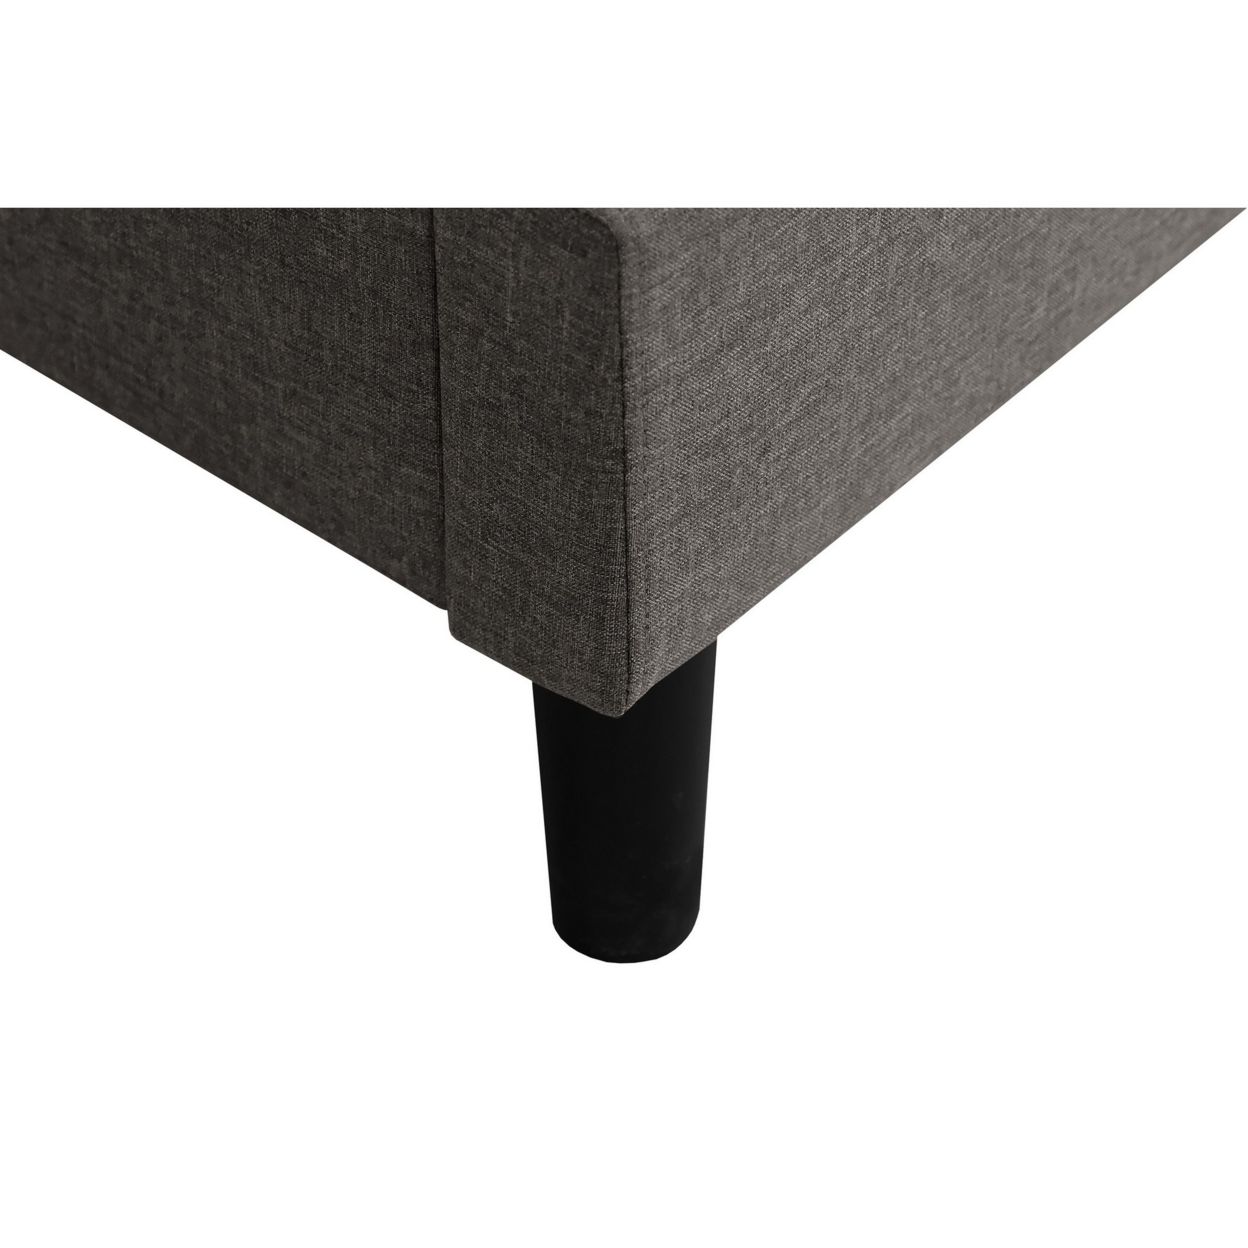 Rin Queen Size Platform Bed, Charcoal Gray Upholstery, Panel Headboard- Saltoro Sherpi